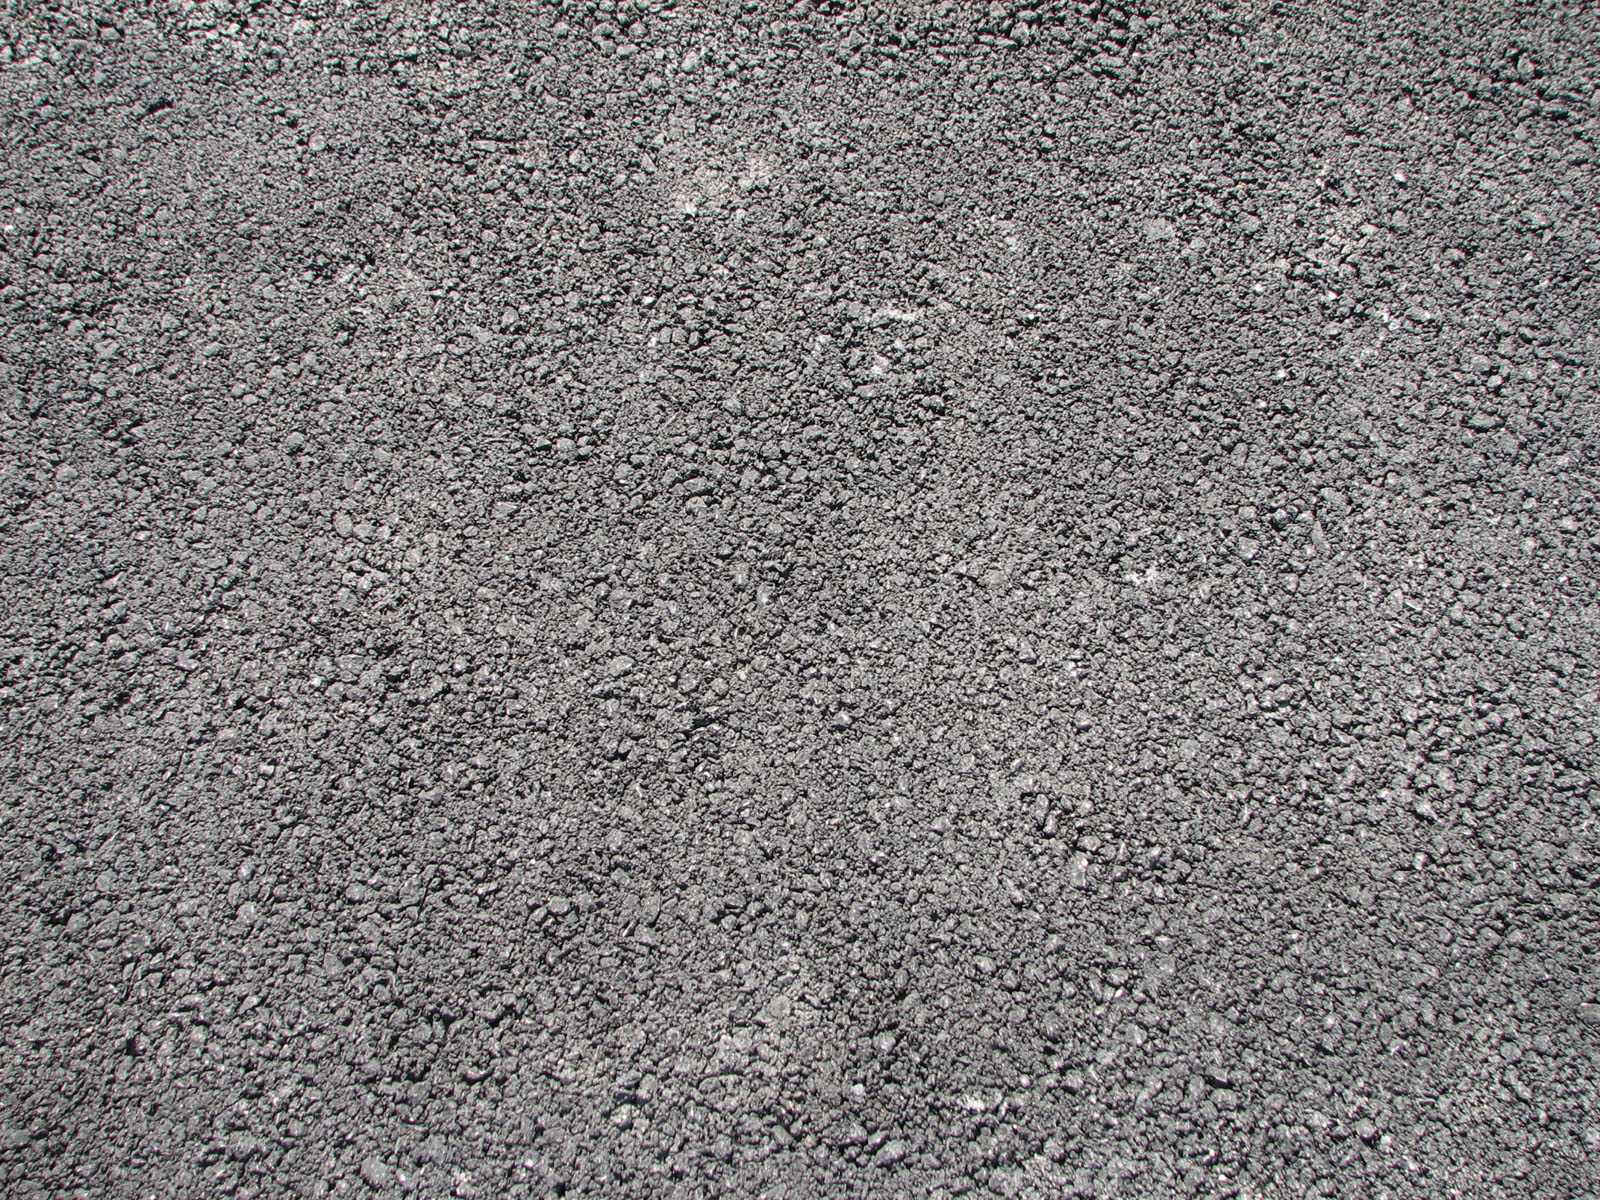 Apshalt-14 for 1600 x 1200 resolution